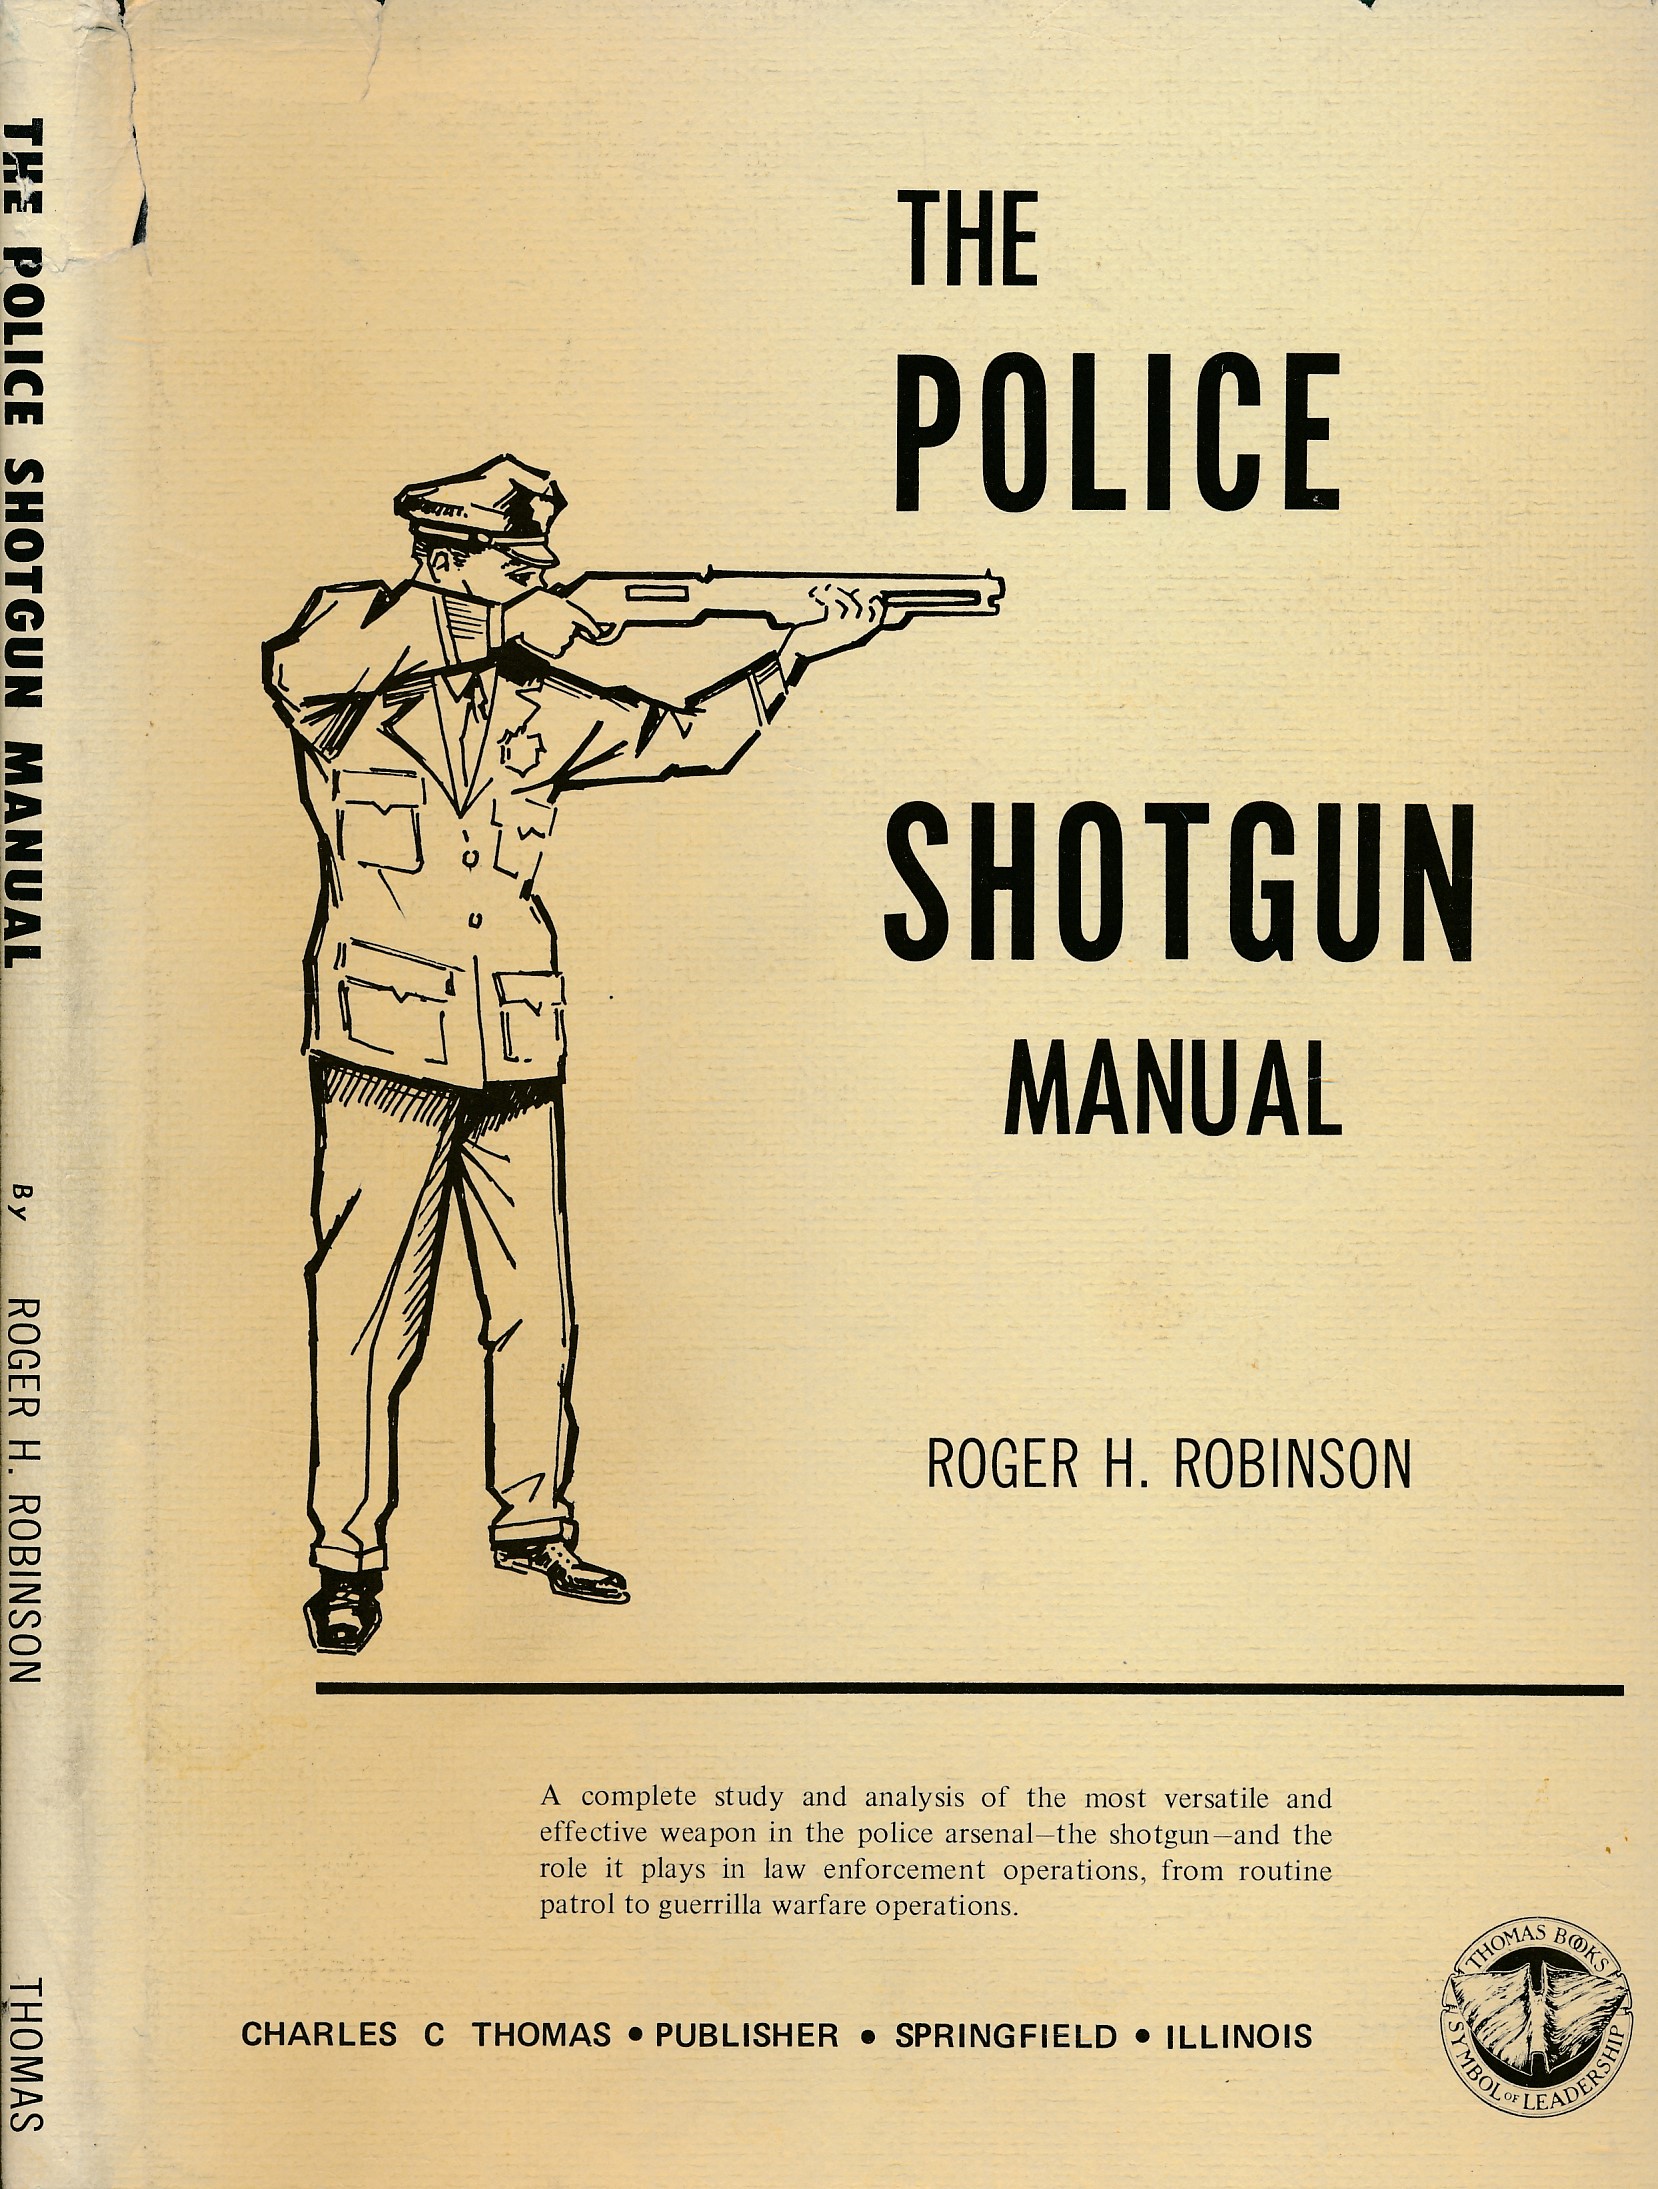 The Police Shotgun Manual